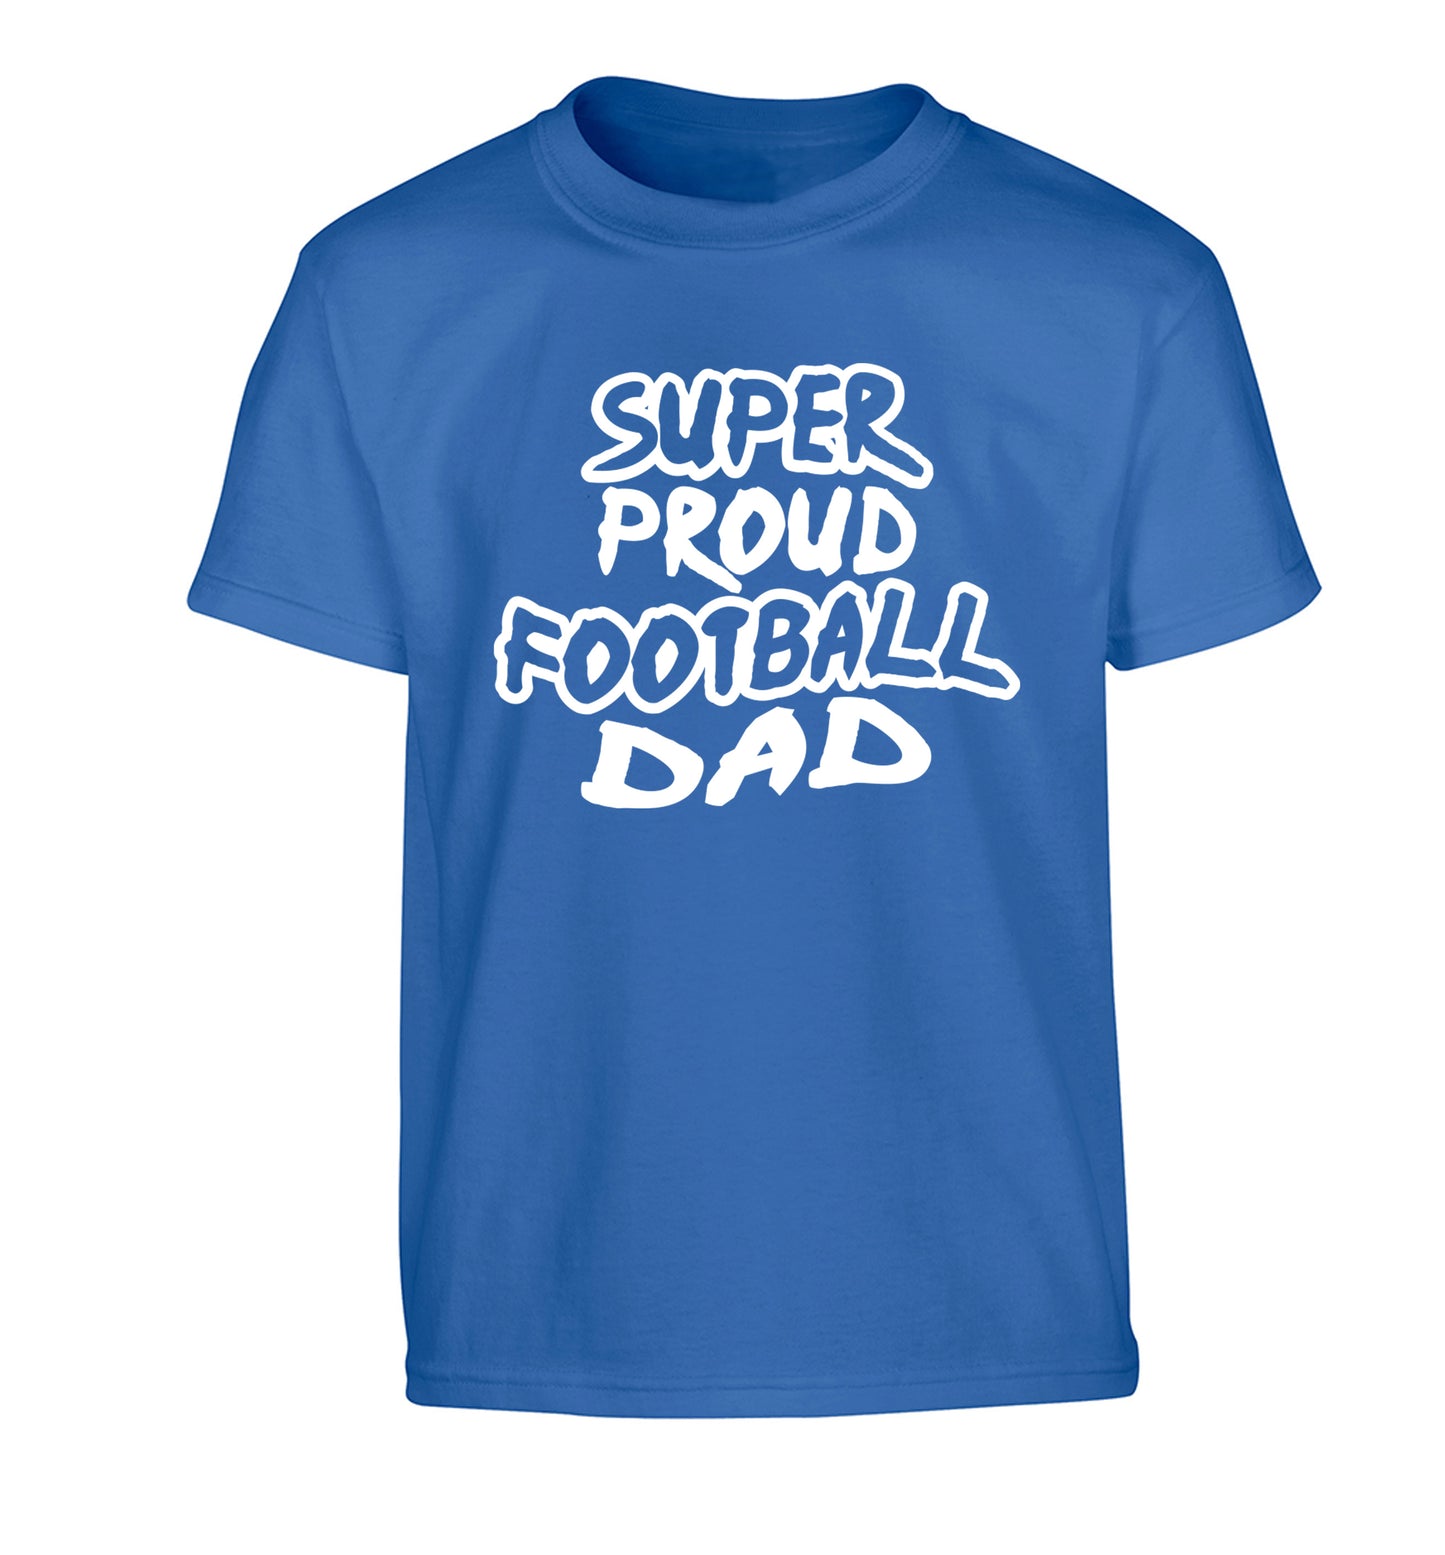 Super proud football dad Children's blue Tshirt 12-14 Years